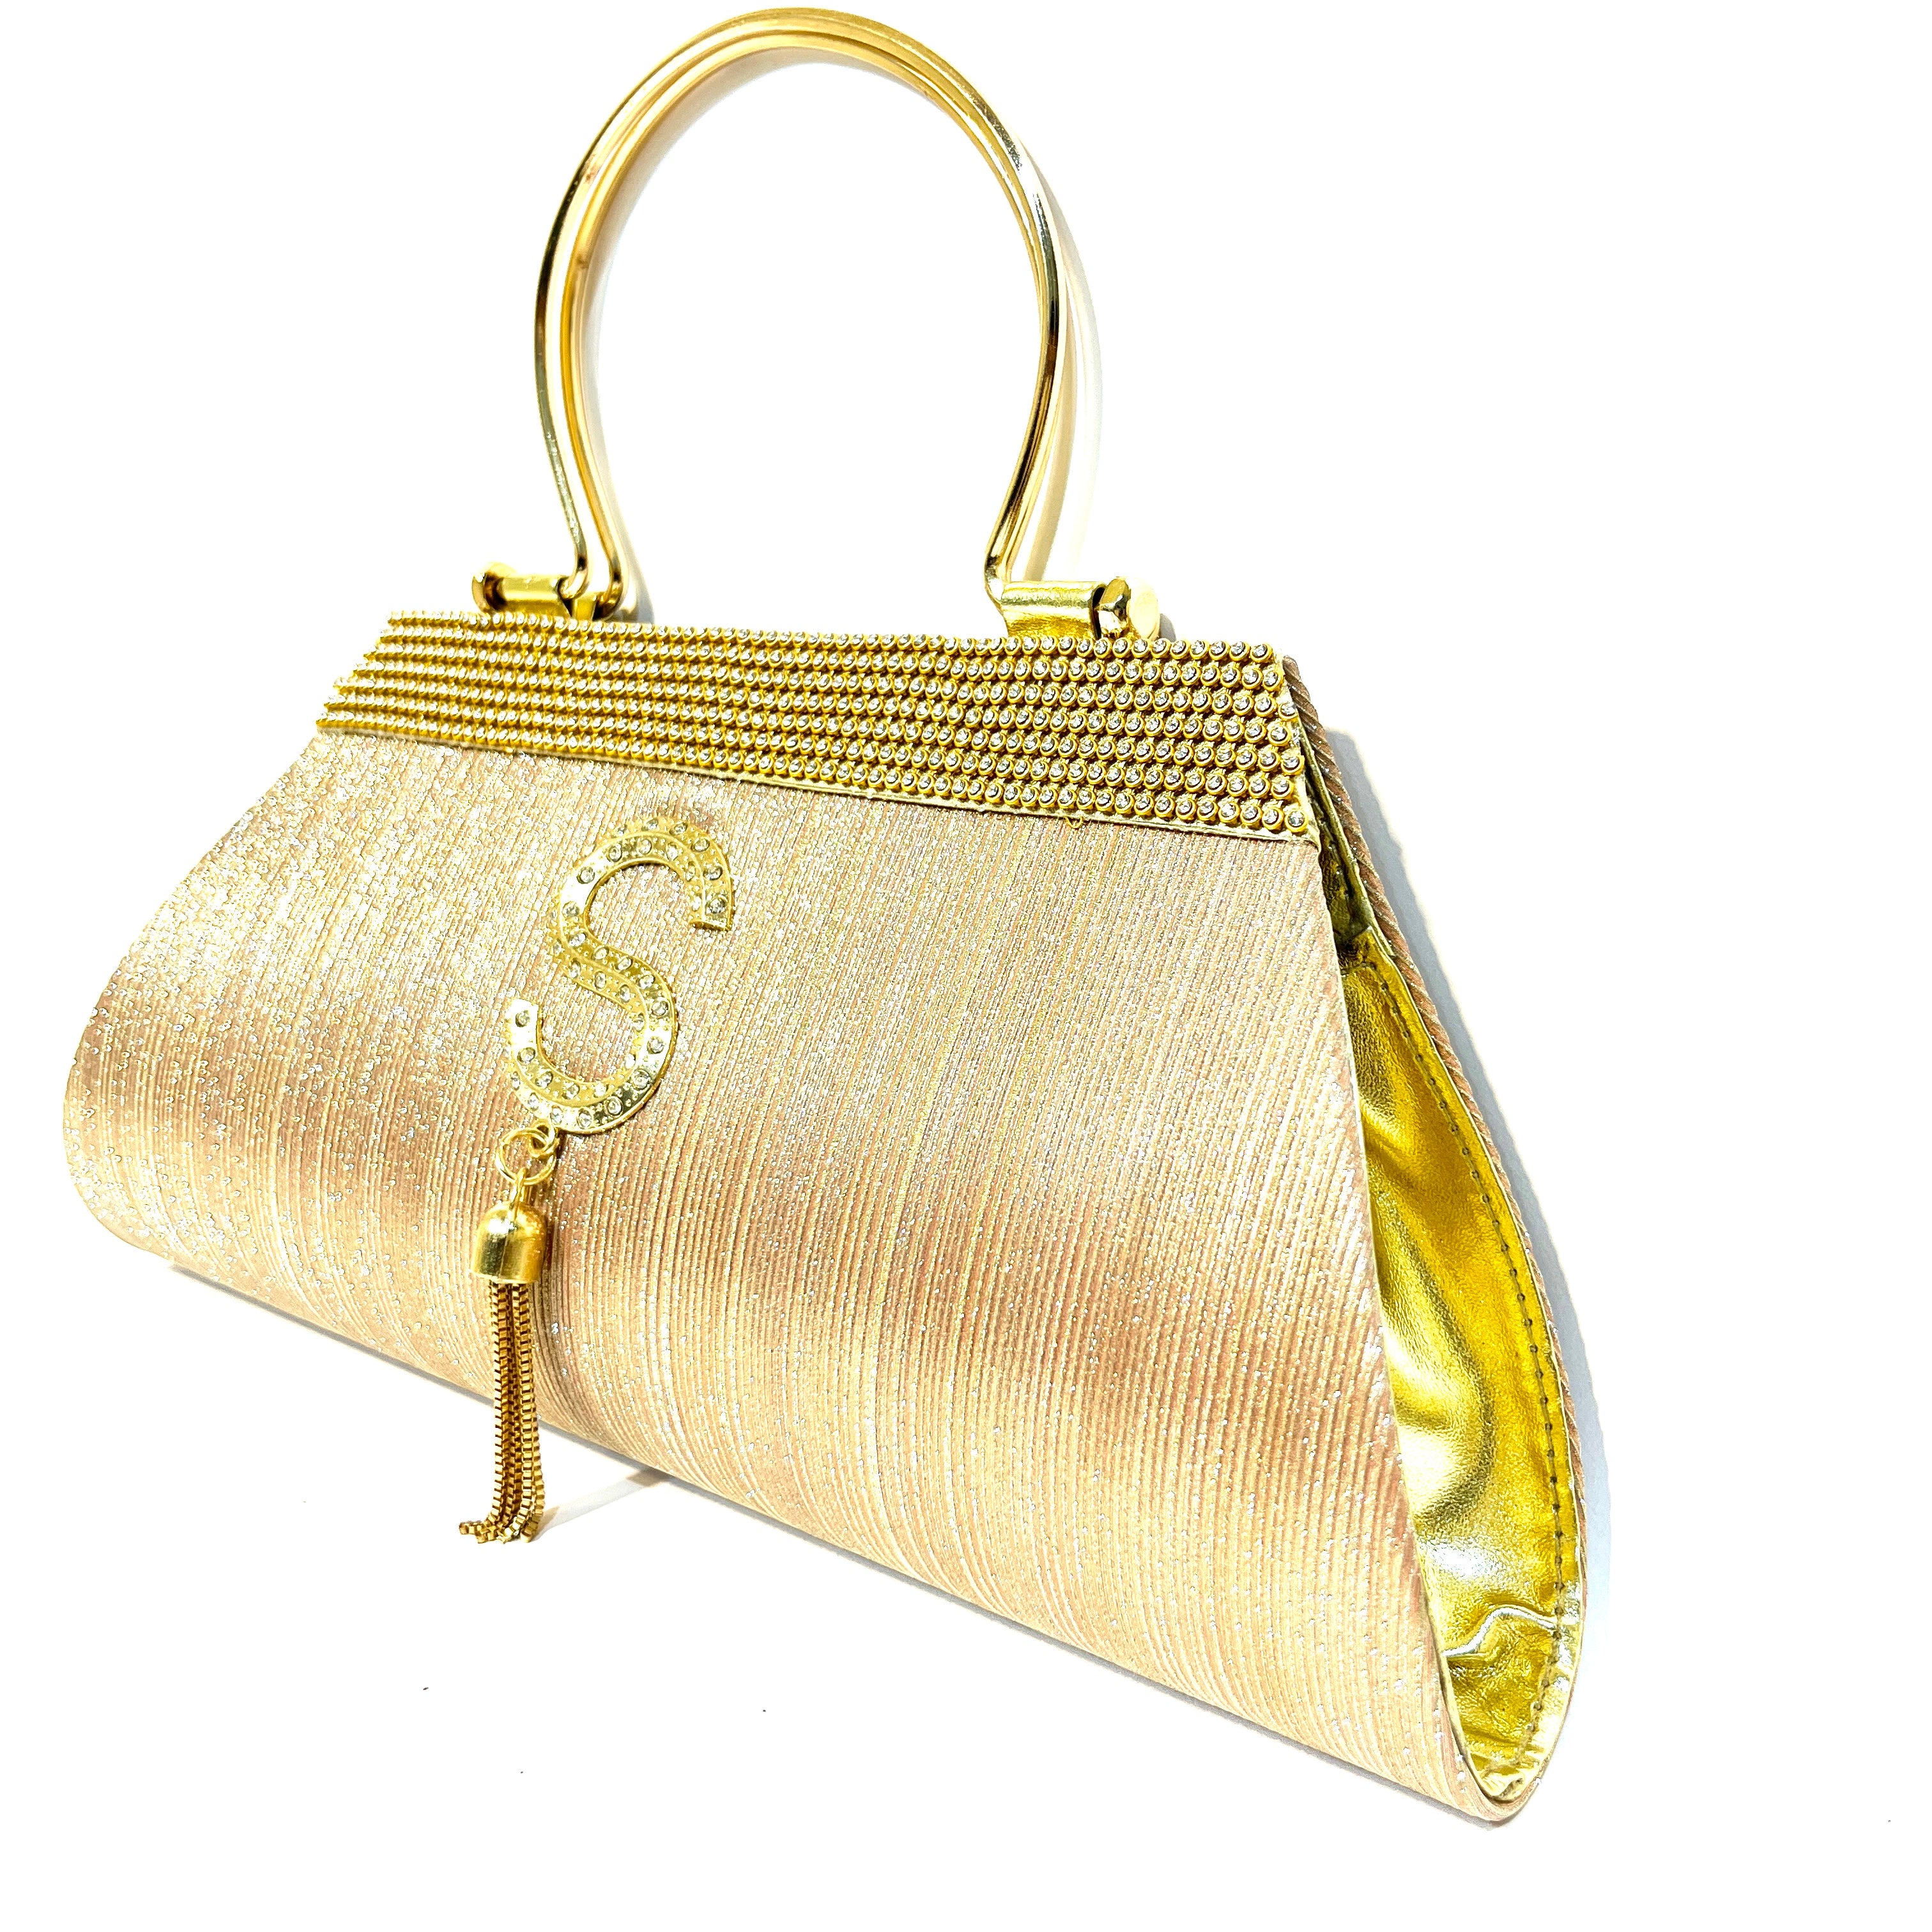 PURSEO Clutch Pearl Purses for Women Handbag Bridal Evening Clutch Bags for  Party Wedding / Dulhan Purse /